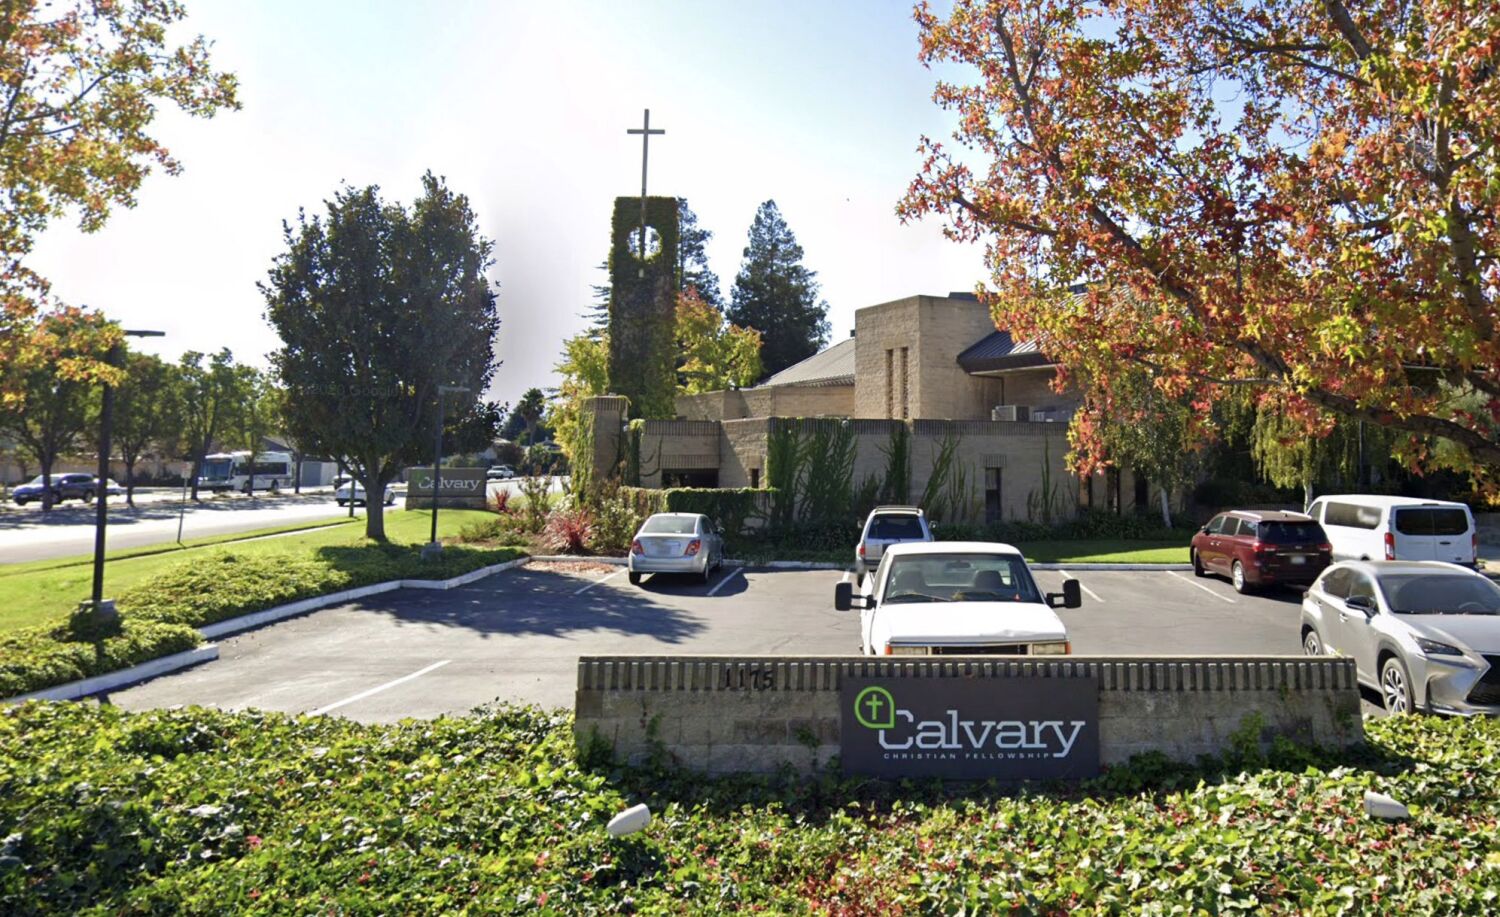 California Supreme Court allows San Jose church to avoid over $200,000 in COVID-19 fines